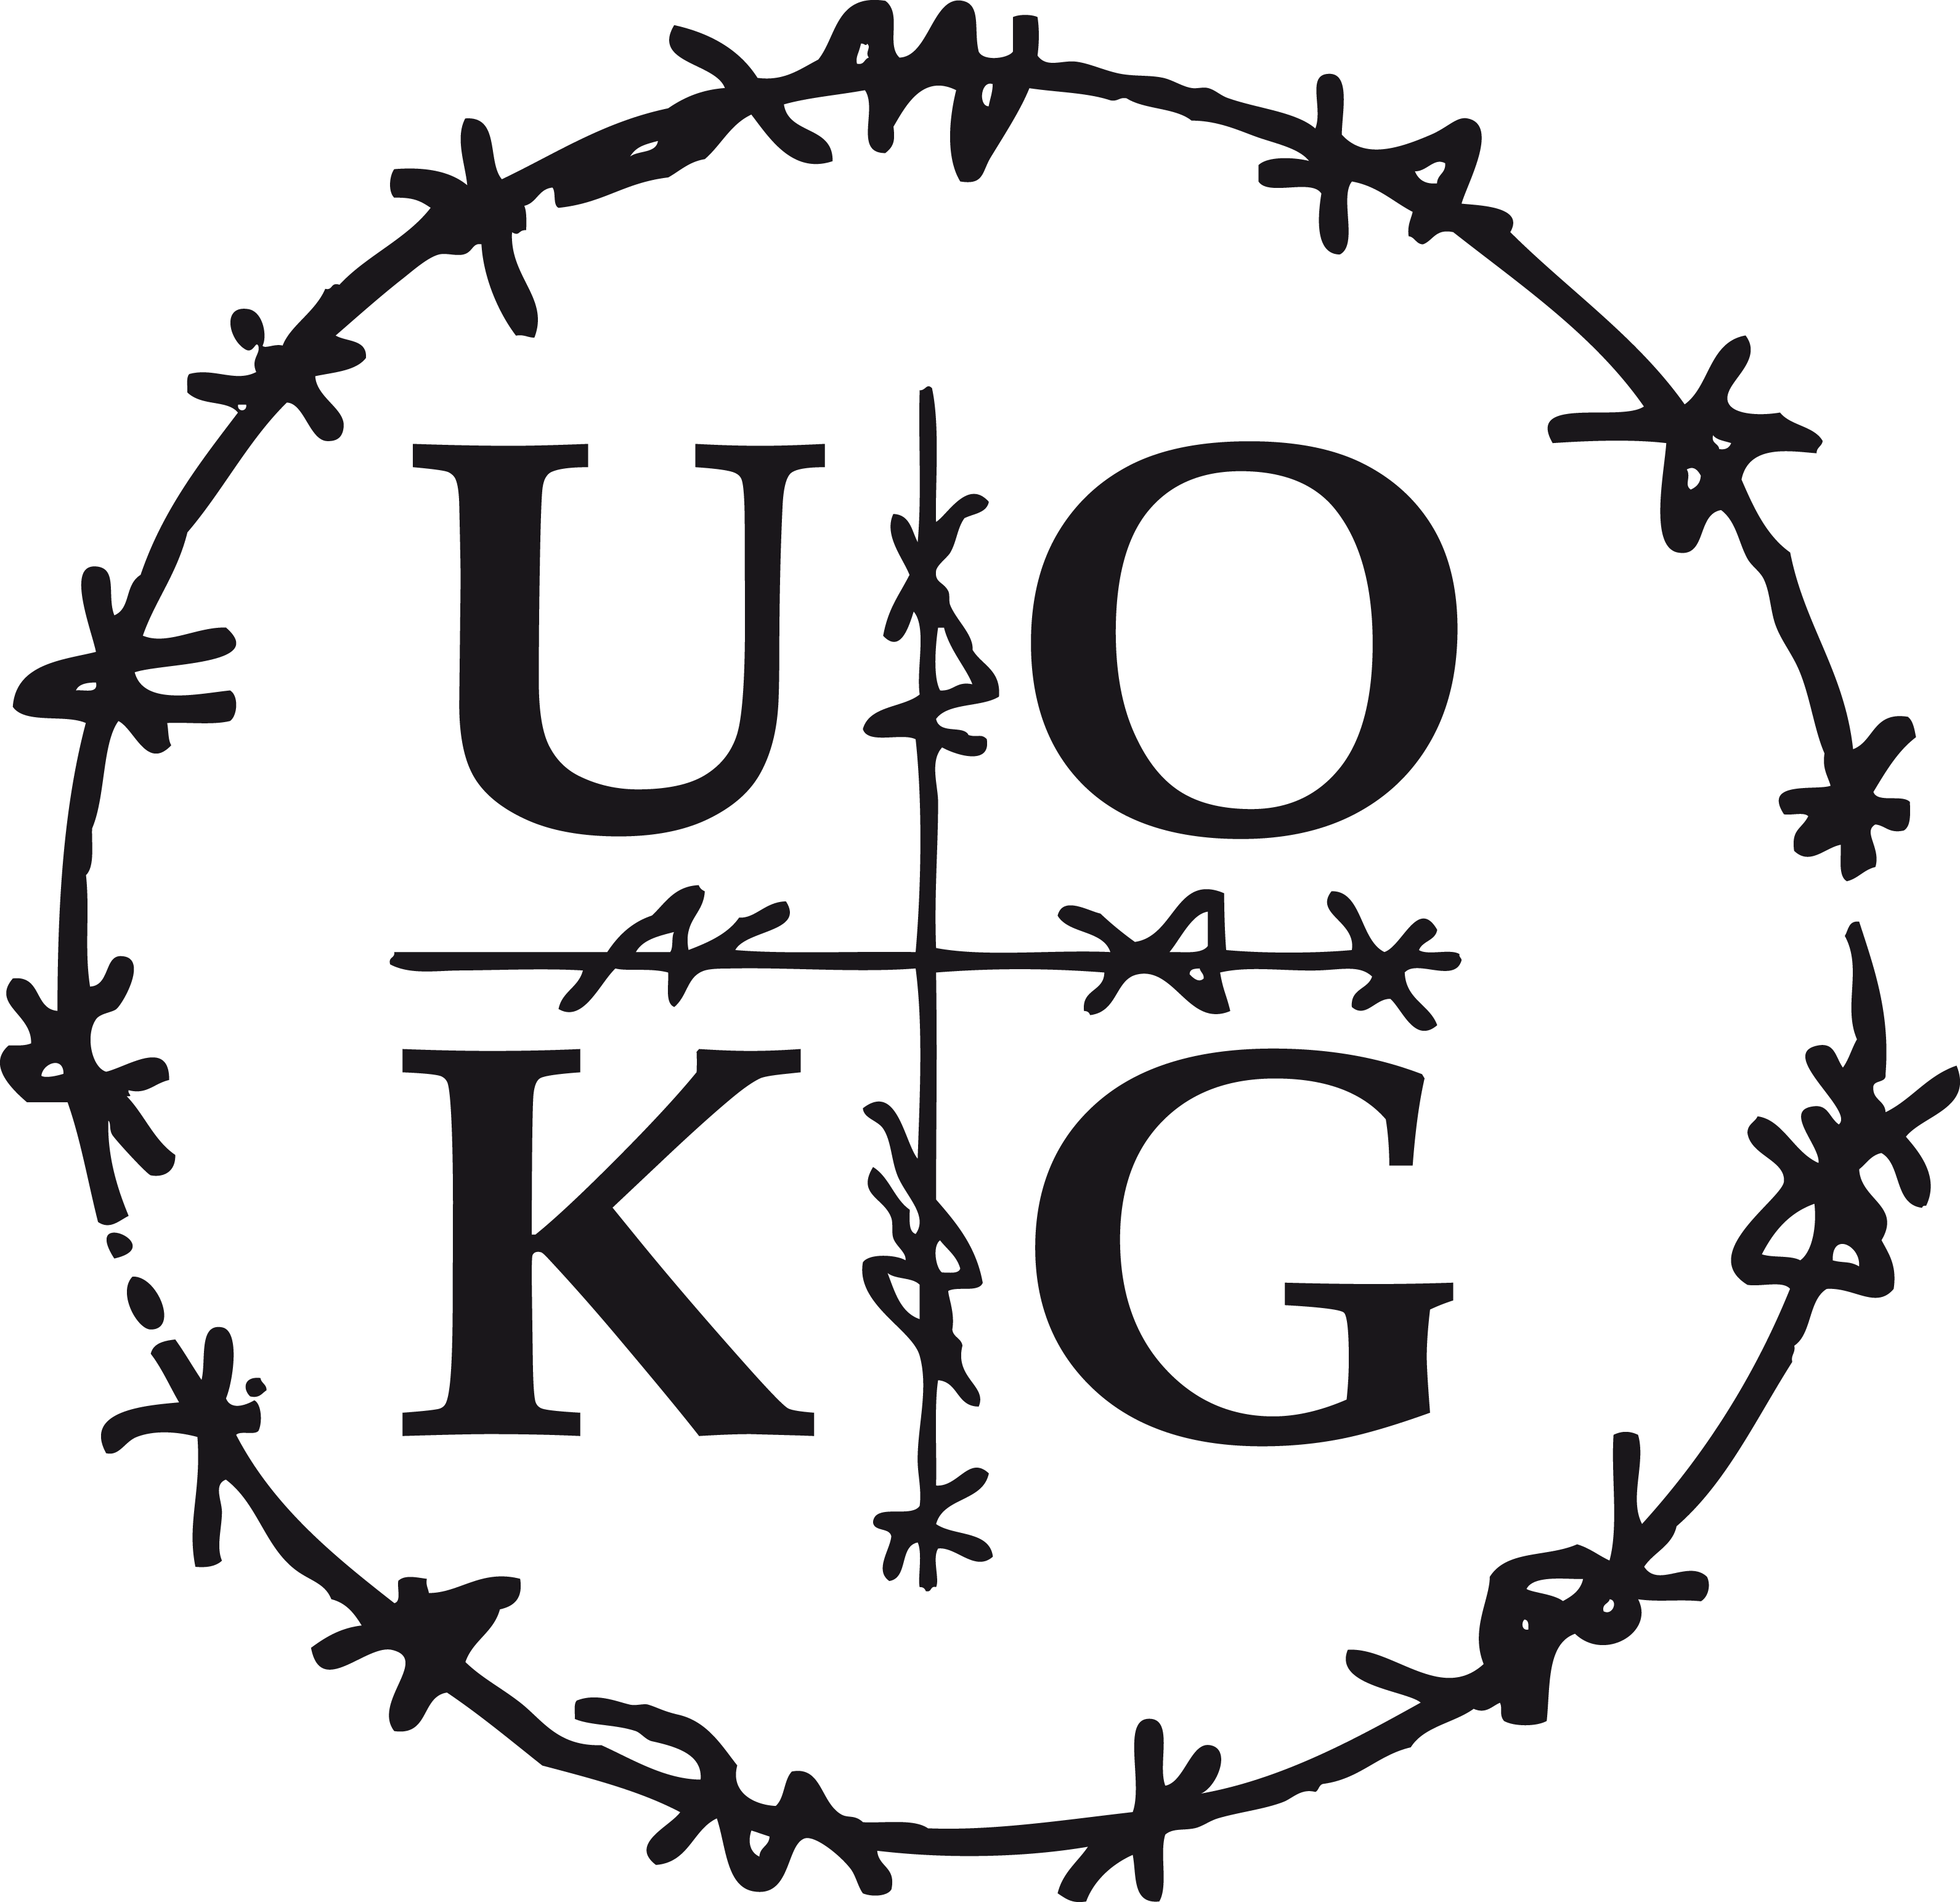 UOKG-Logo